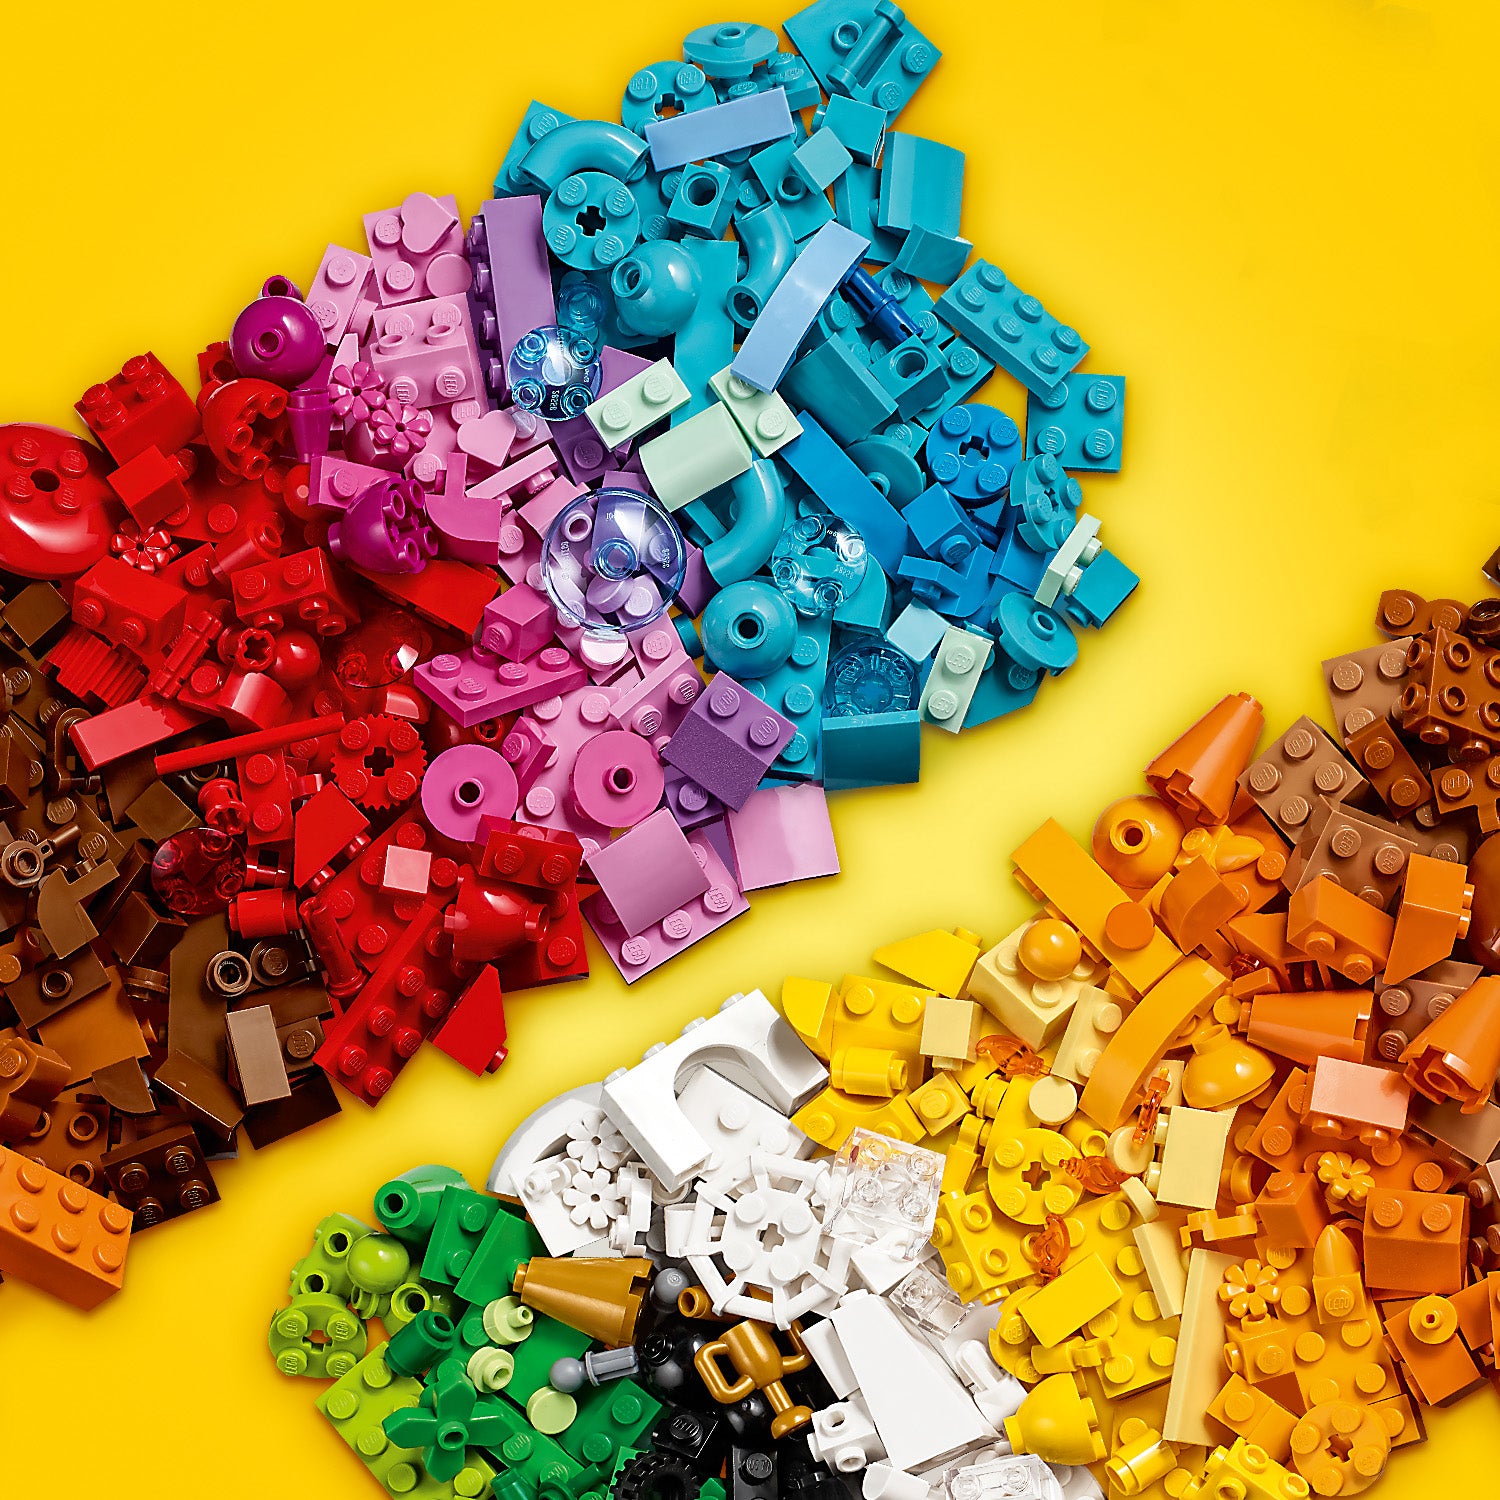 Lego 11029 Creative Party Box